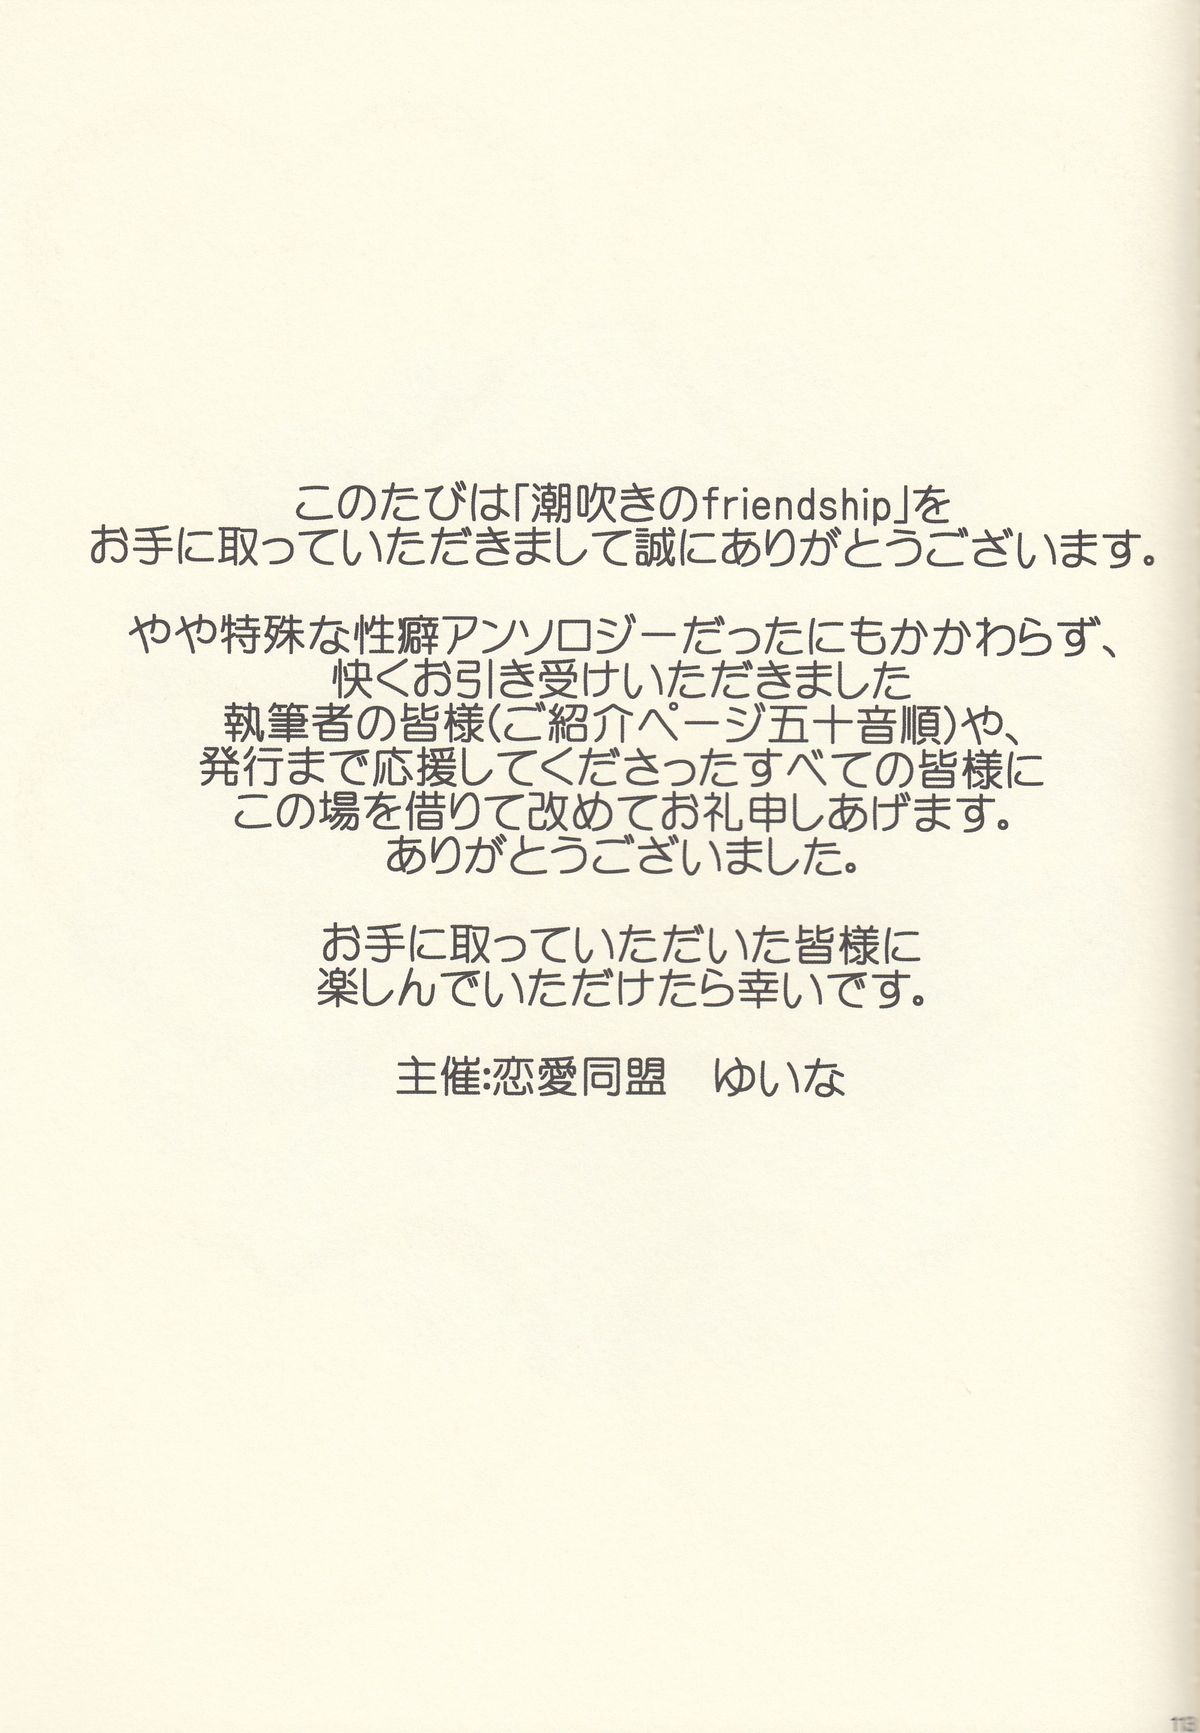 Shiofuki no Friendship - Makoto ♥ Haruka Squirting Anthology - Foto 70